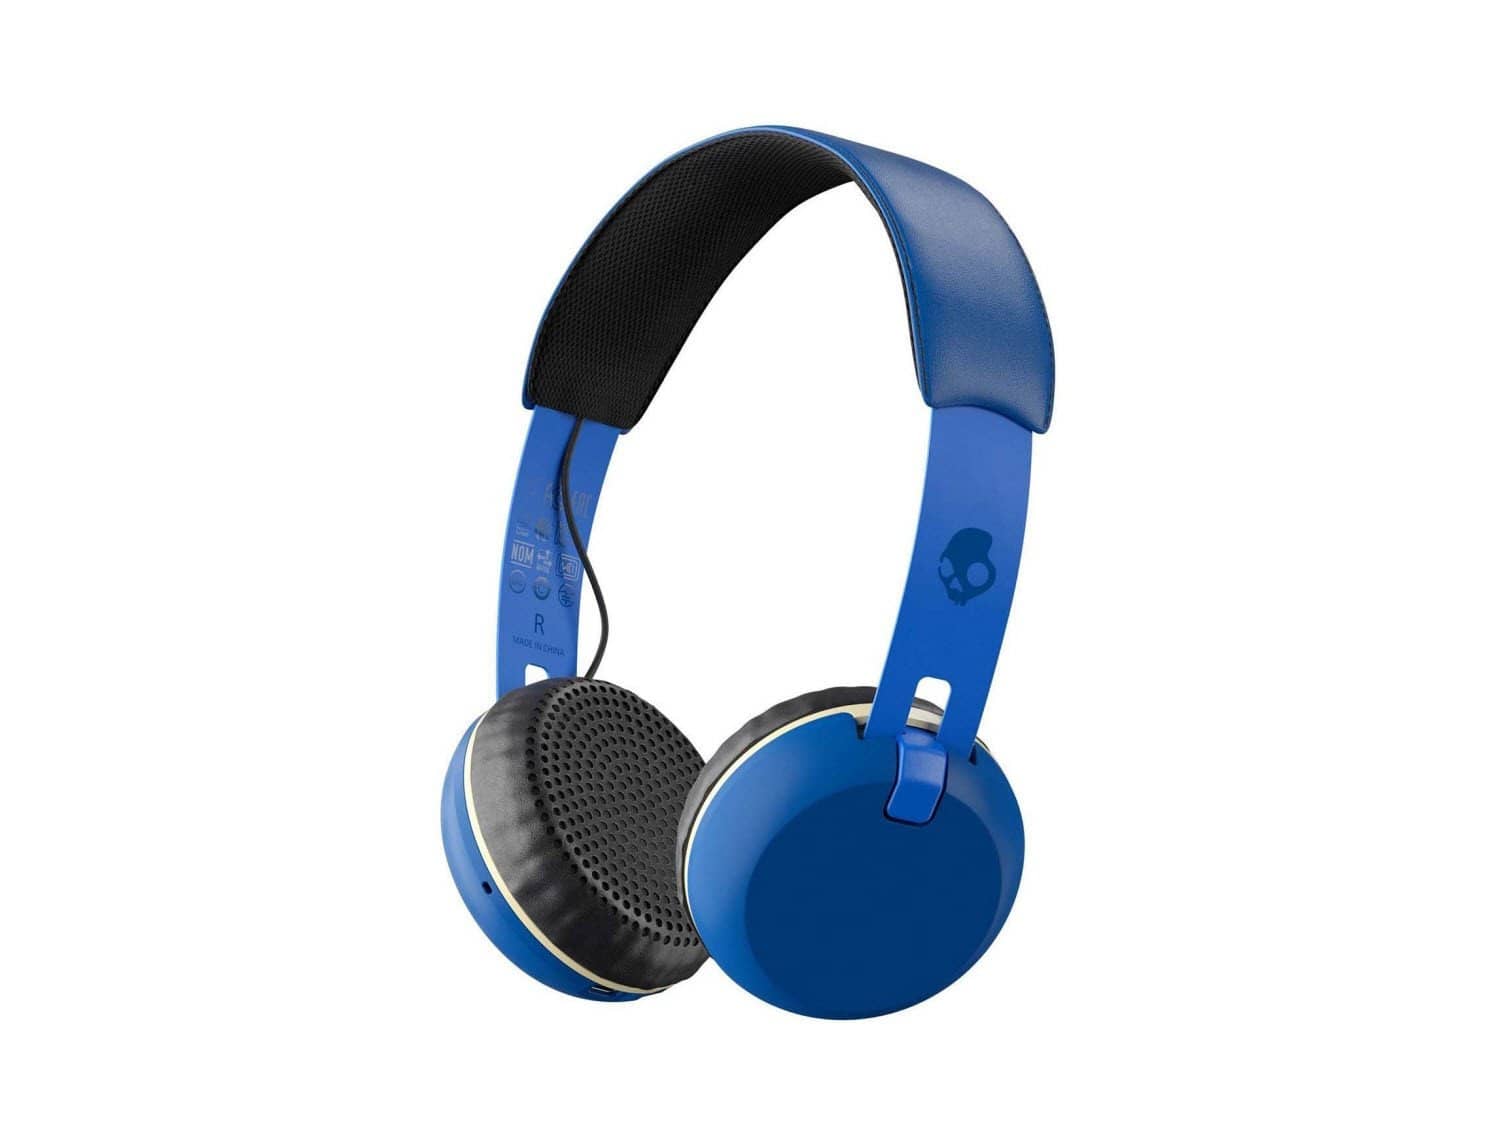 Skullcandy Grind Bluetooth Wireless On-Ear Headphones -  Royal Blue